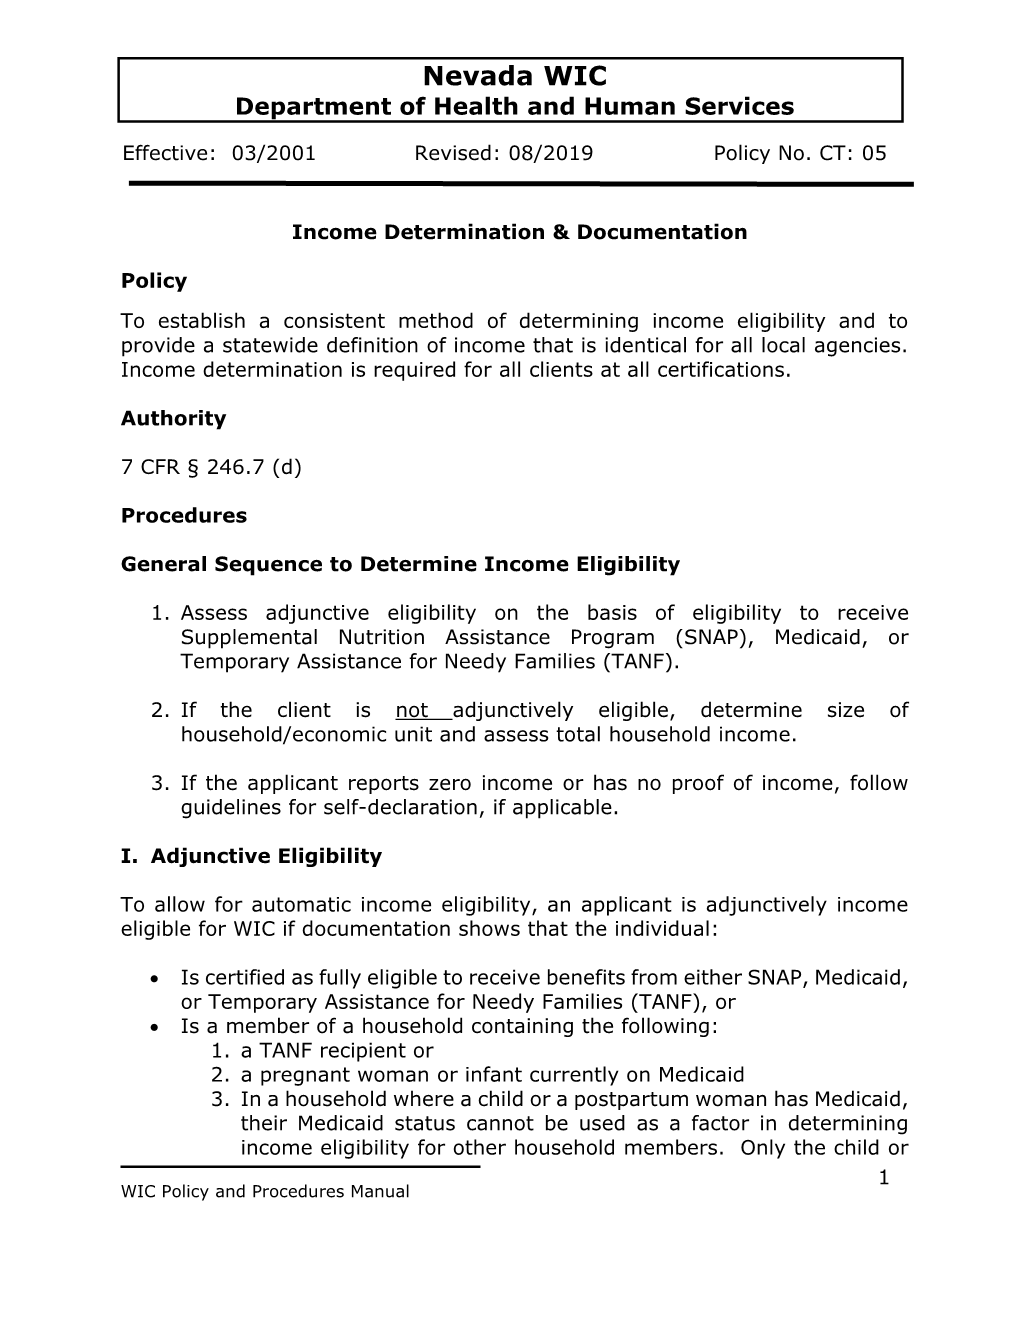 CT-5-Income-Determination-And-Documentation-19.Pdf